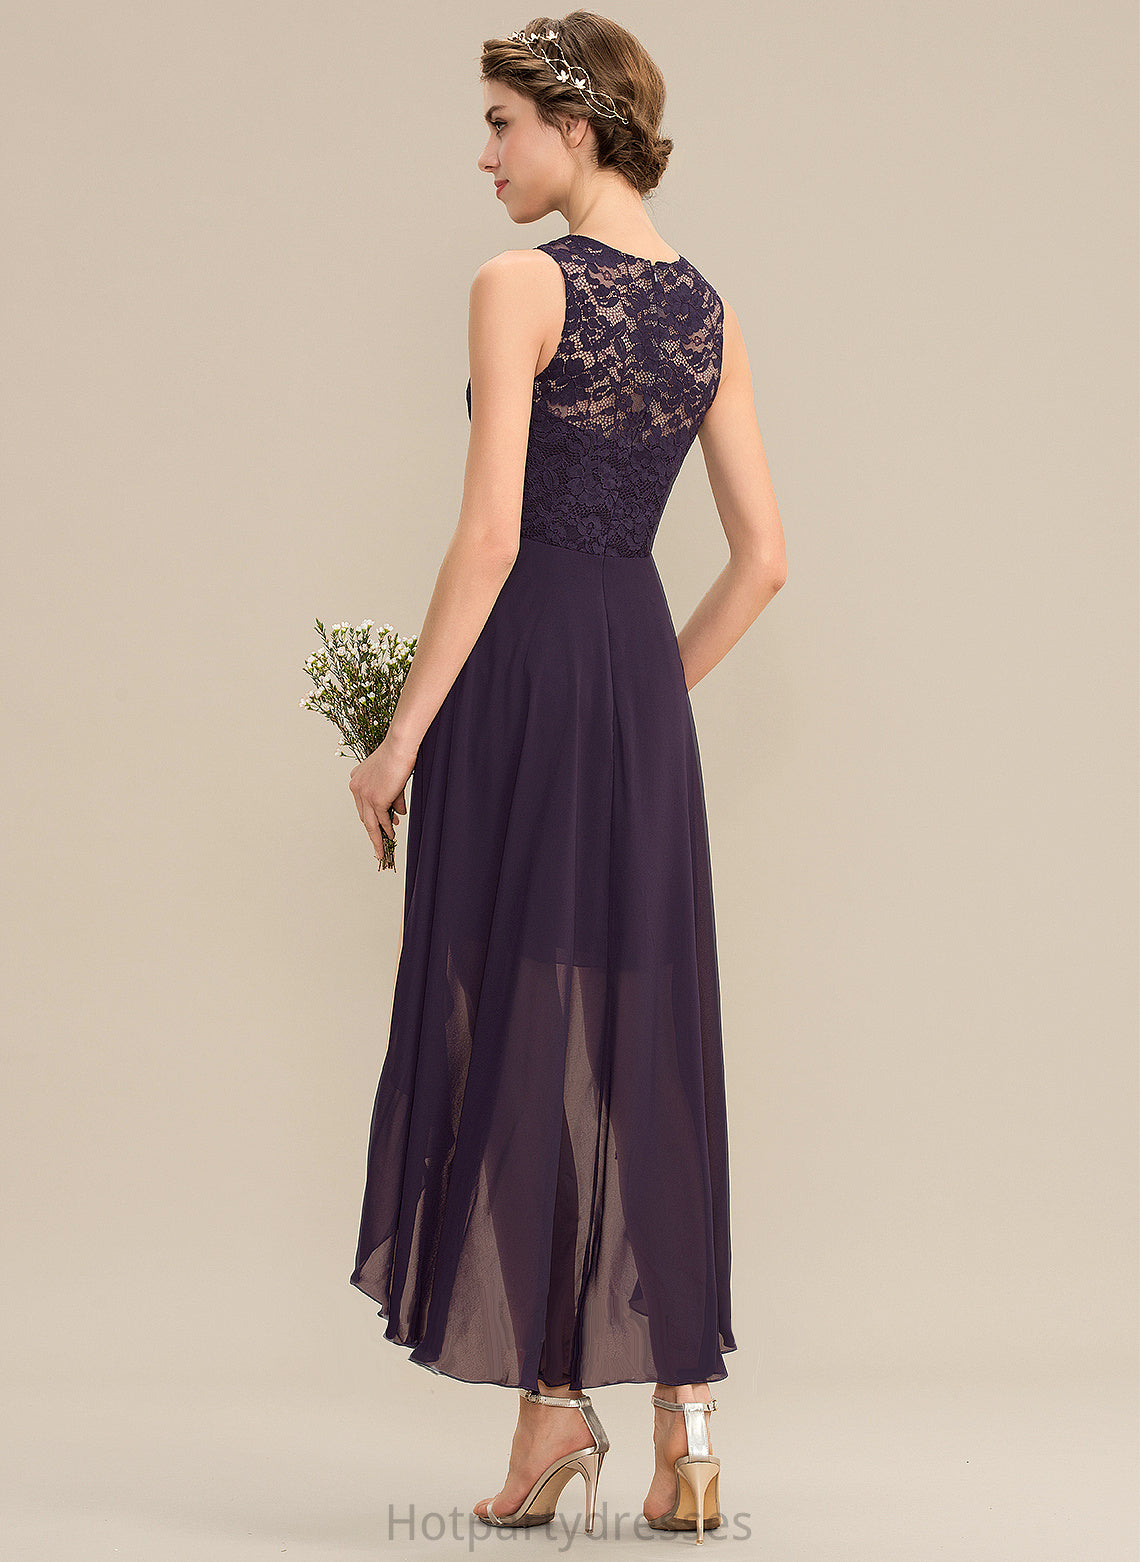 A-Line Silhouette Neckline ScoopNeck Asymmetrical Fabric Length Lace Straps Averi Floor Length Natural Waist Bridesmaid Dresses